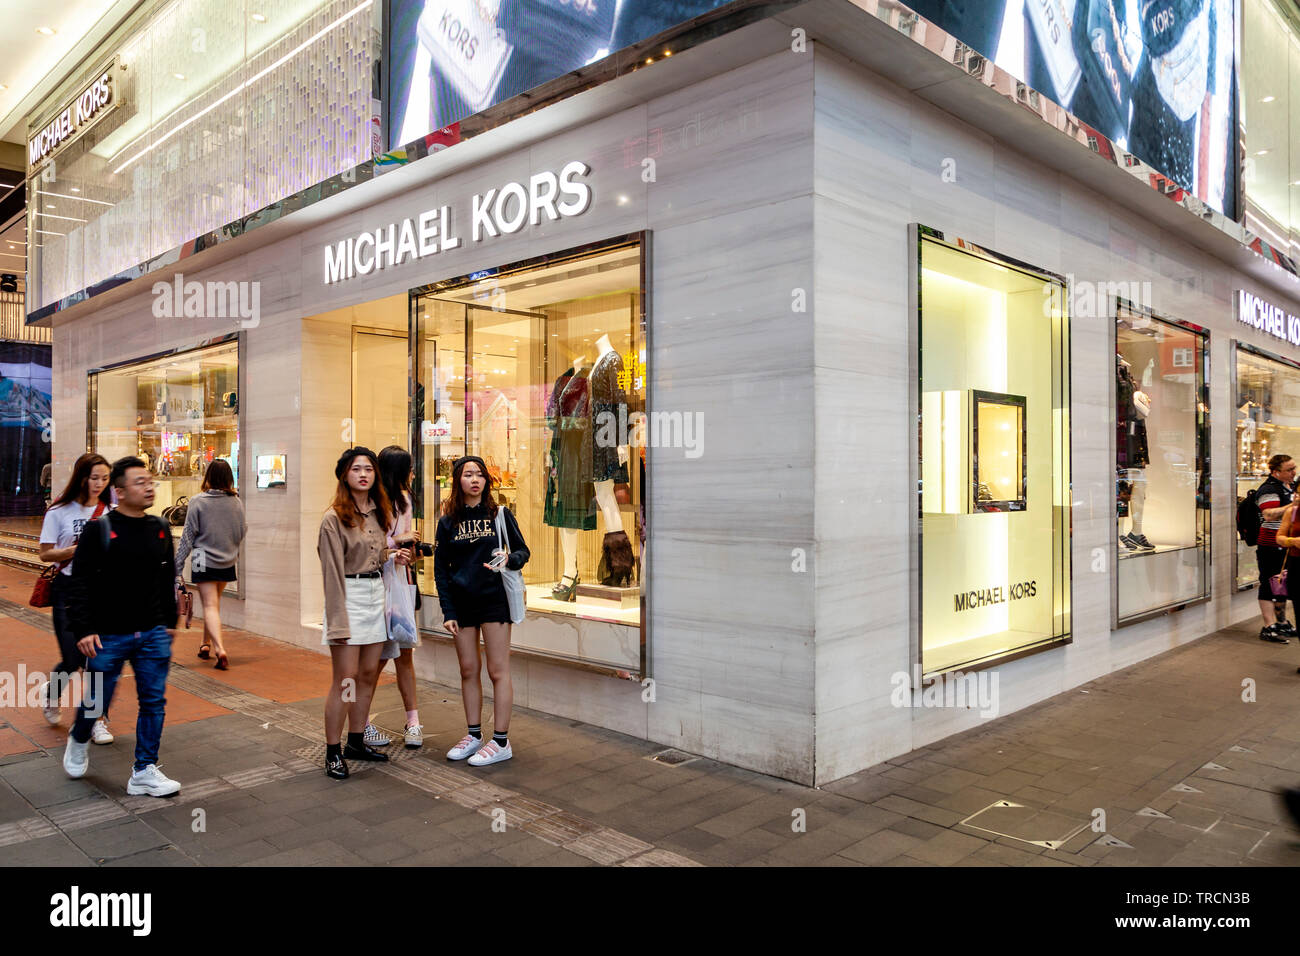 The Michael Kors Fashion Accessories Shop, Hong Kong, China Stock Photo -  Alamy